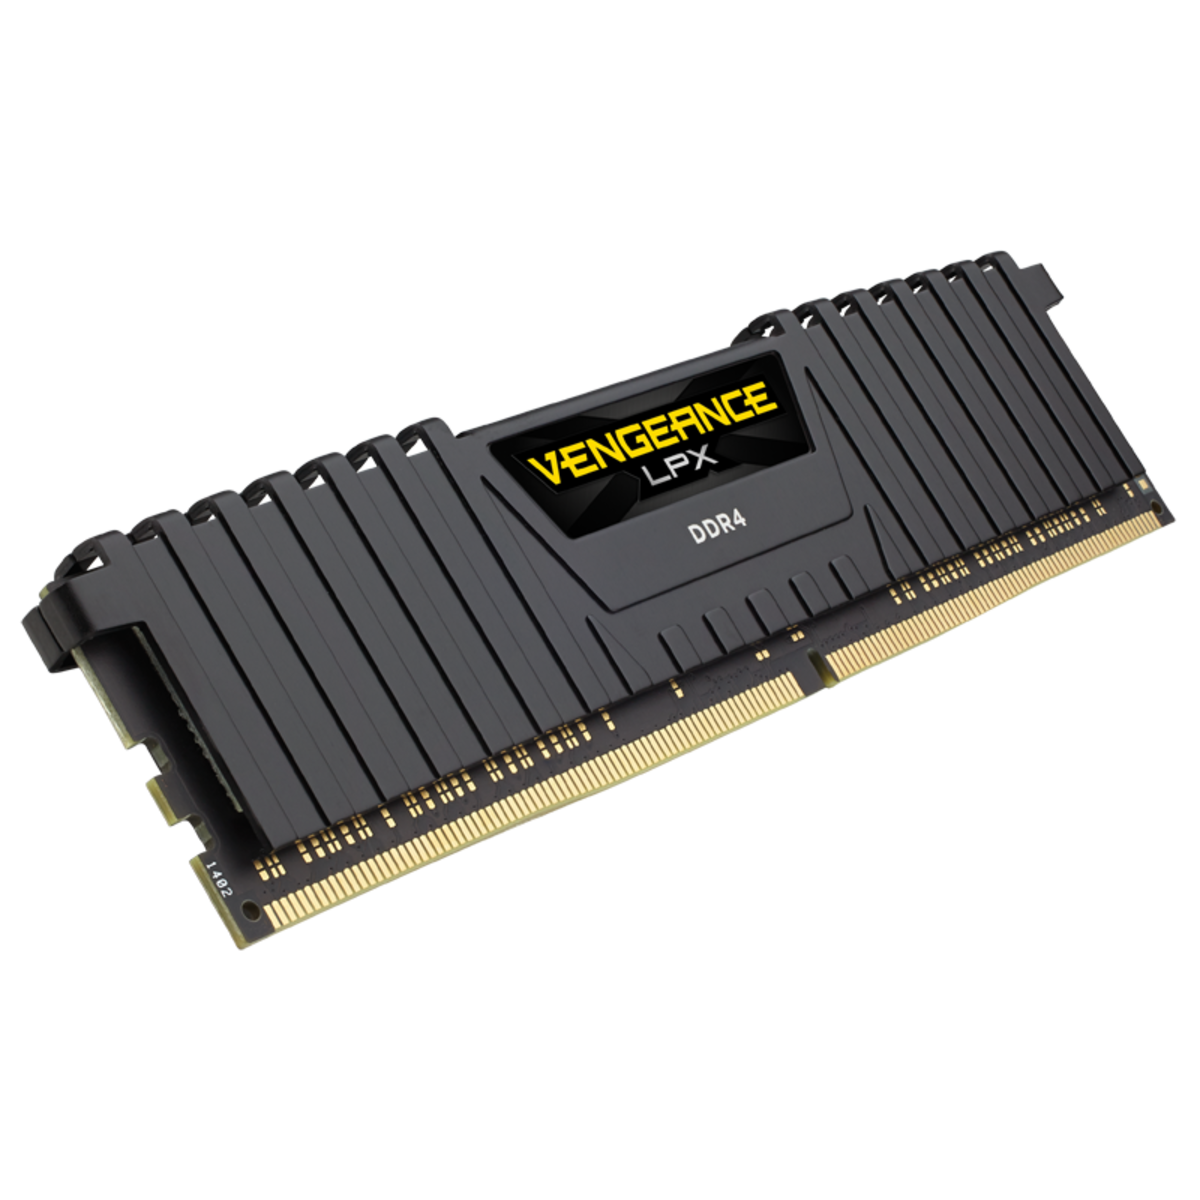 CORSAIR VENGEANCE LPX 16GB (16GB*1) DDR4 3600MHz MEMORY